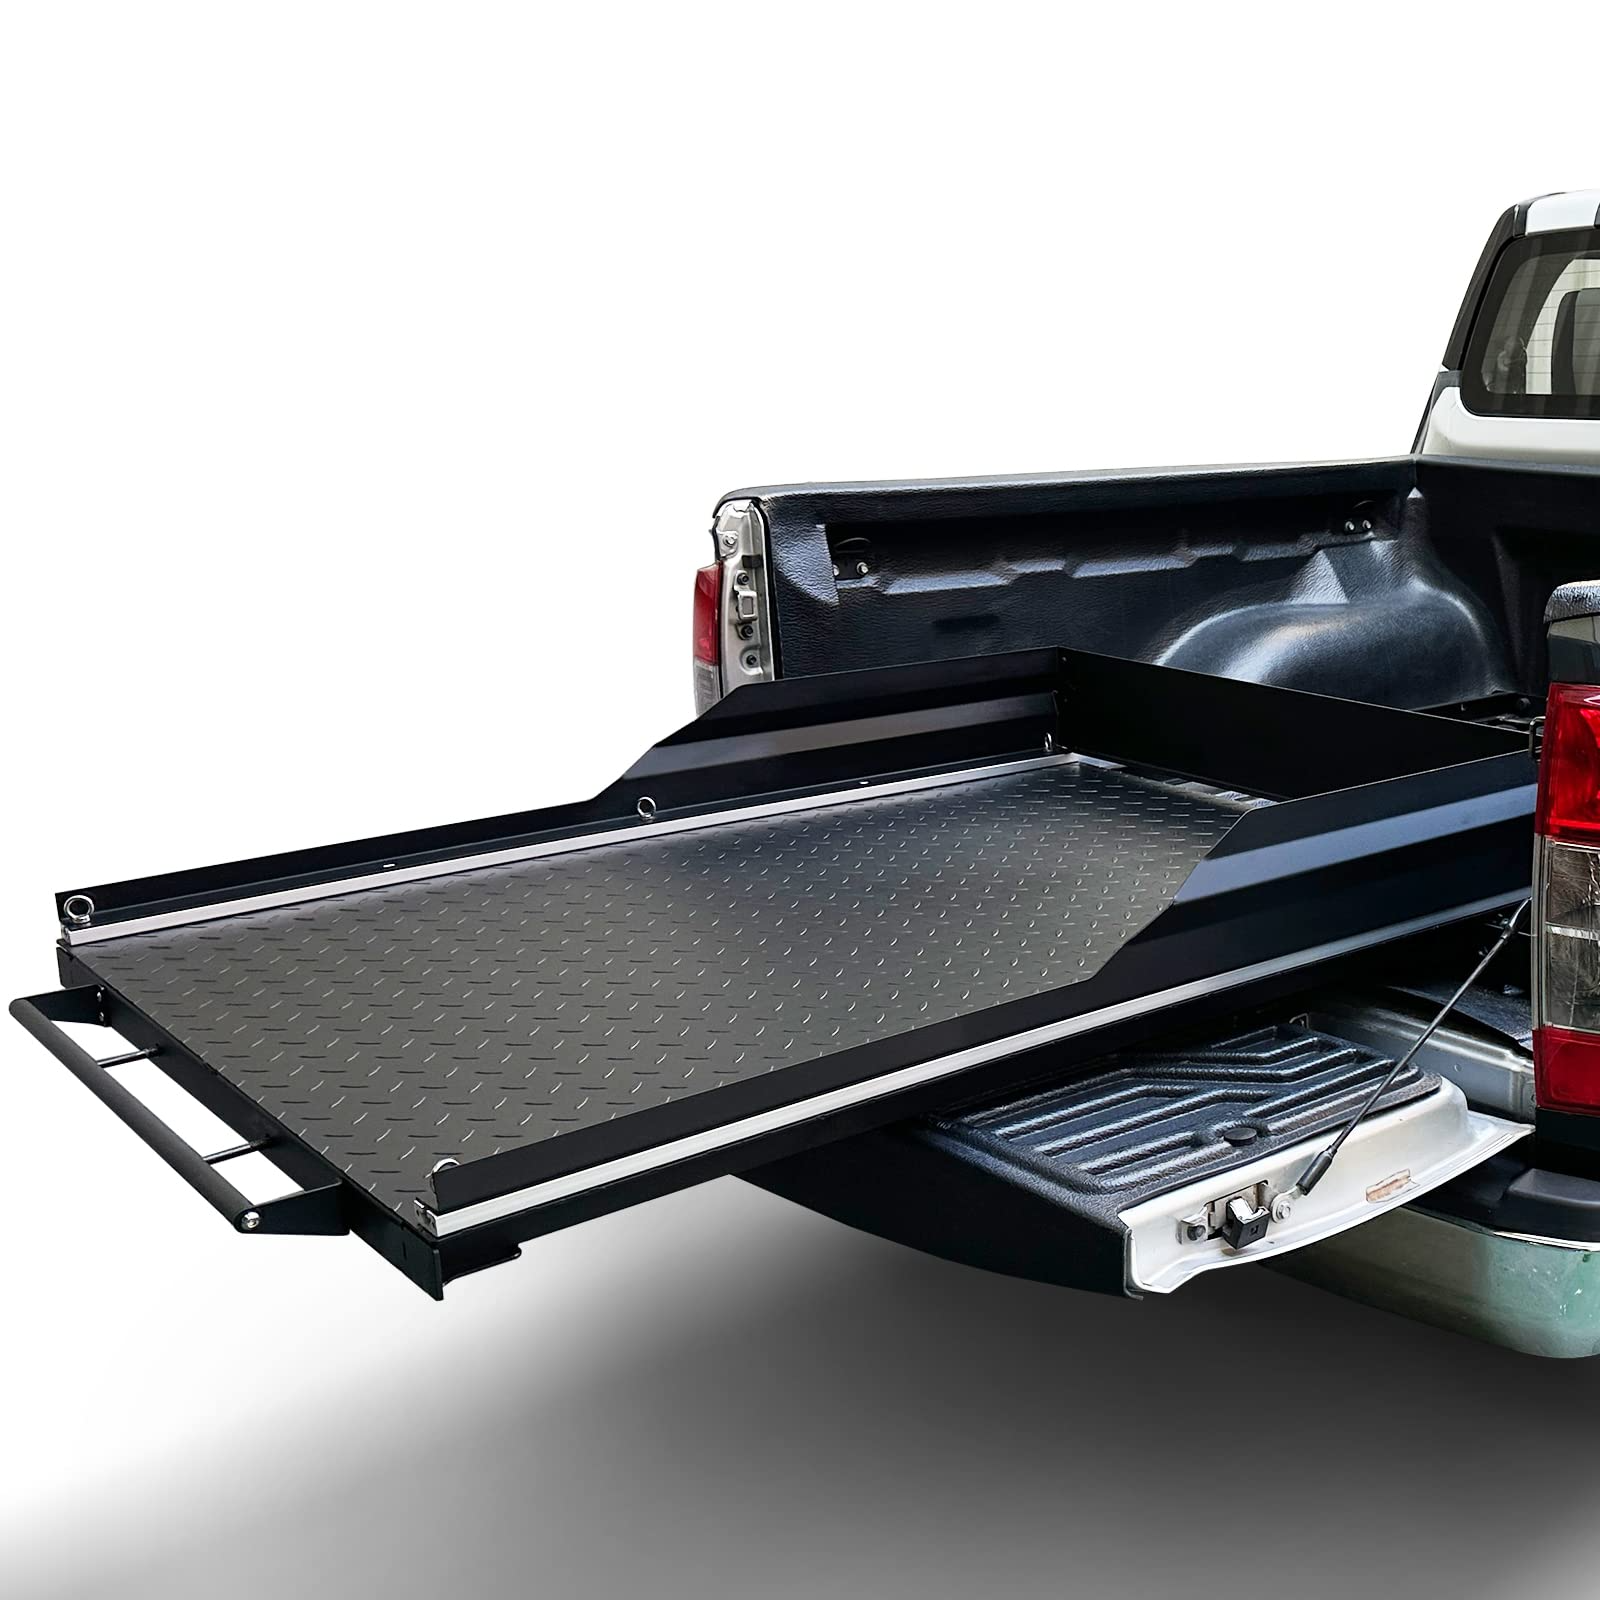 Kreboc Metal Base Truck Bed Slide(51''X39'') Heavy Duty Cargo Slide Out Tray, 100% Extension, 1100lbs Load Capacity (Black)